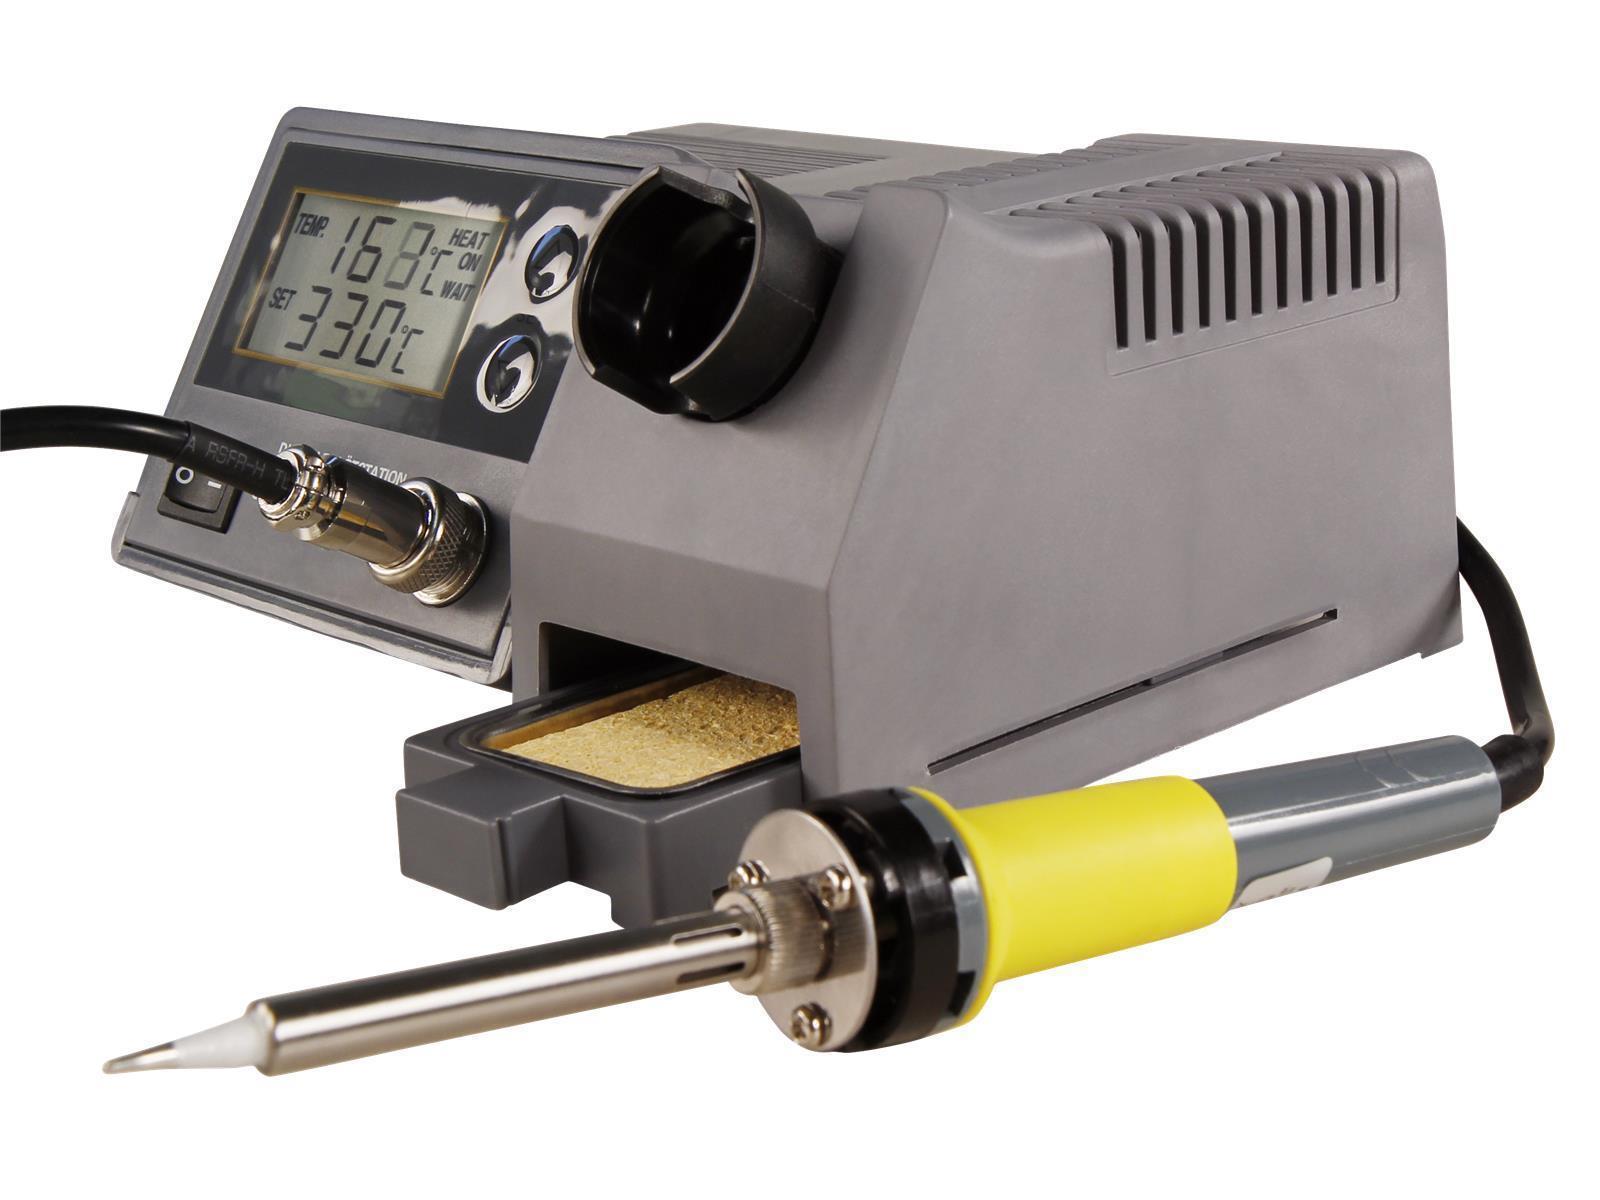 Digitale Lötstation McPower ''LS-450 digi'', 230V / 50 Hz, 48W-Lötkolben, grau